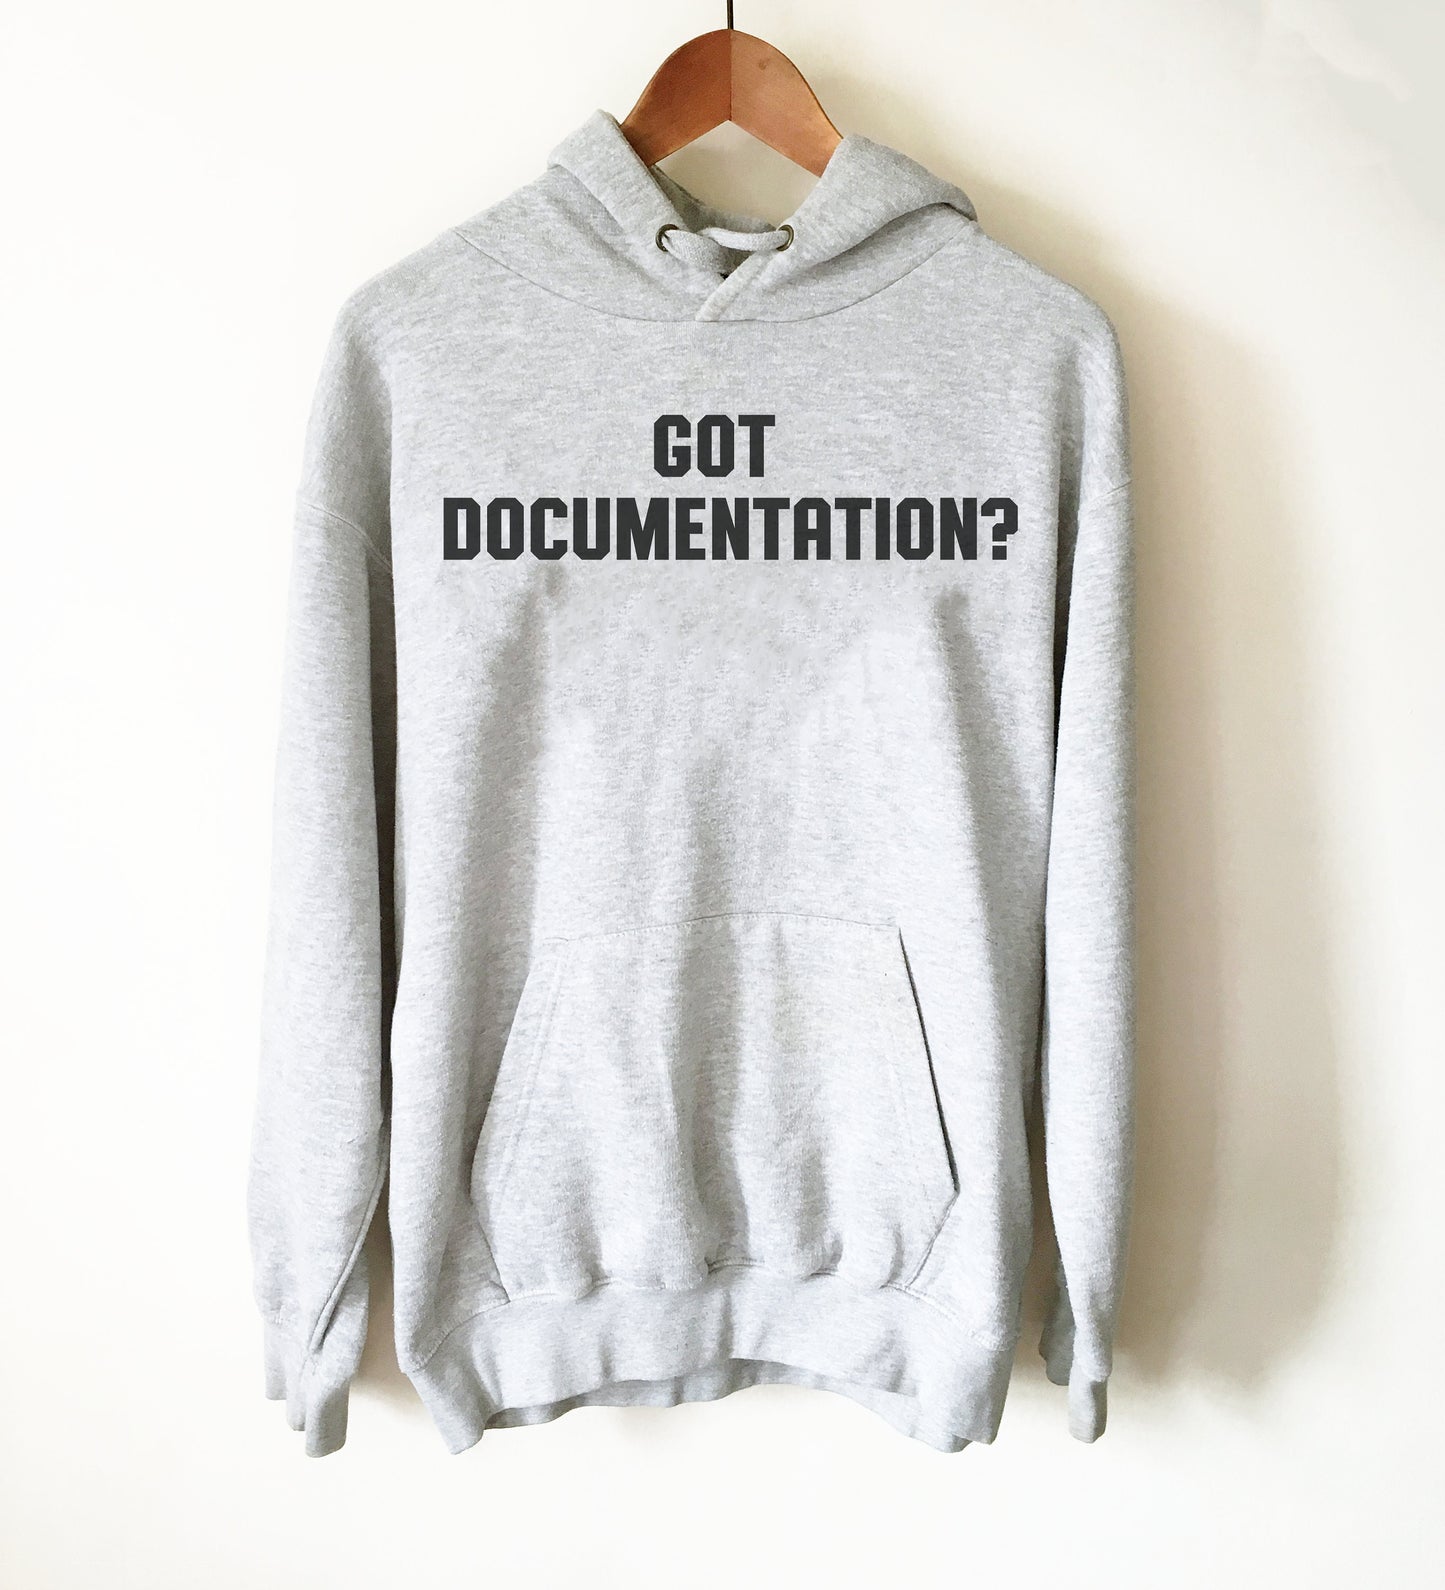 Got Documentation? Hoodie - Auditor Shirt, Auditor Gift, Accountant Shirt, Accountant Gift, Accounting Gift, CPA Gift, Tax Season